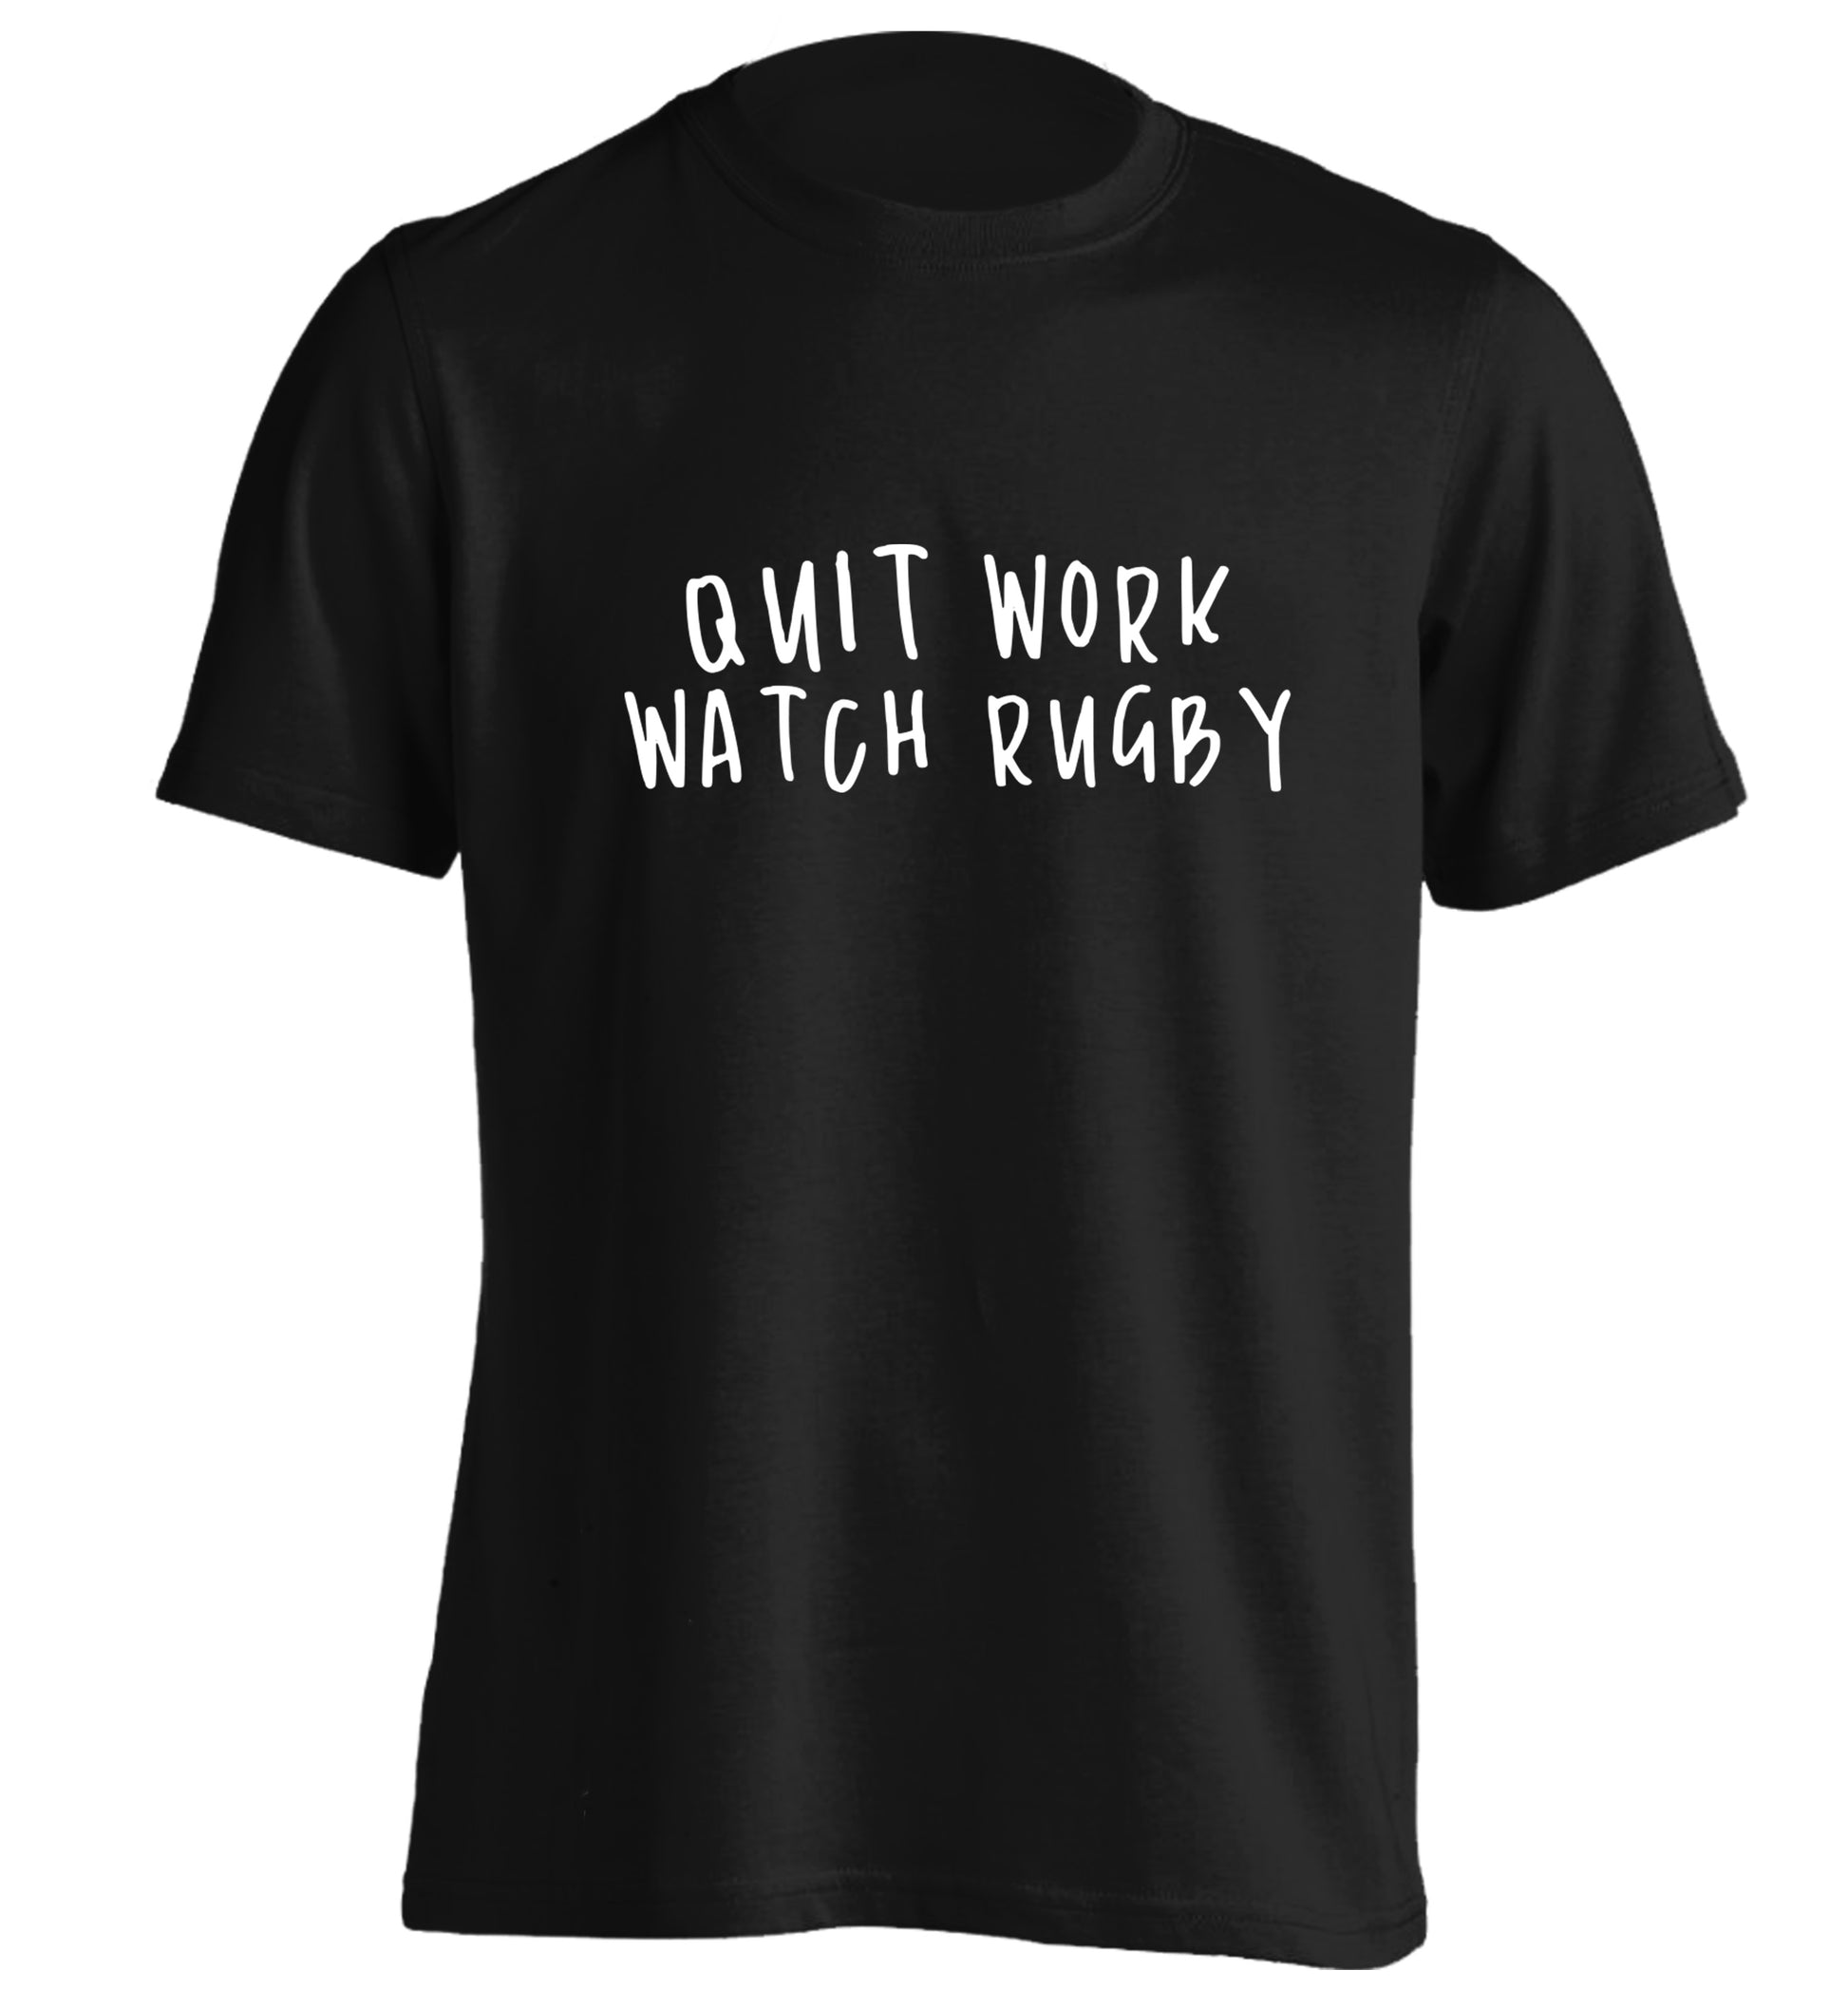 Quit work watch rugby adults unisex black Tshirt 2XL